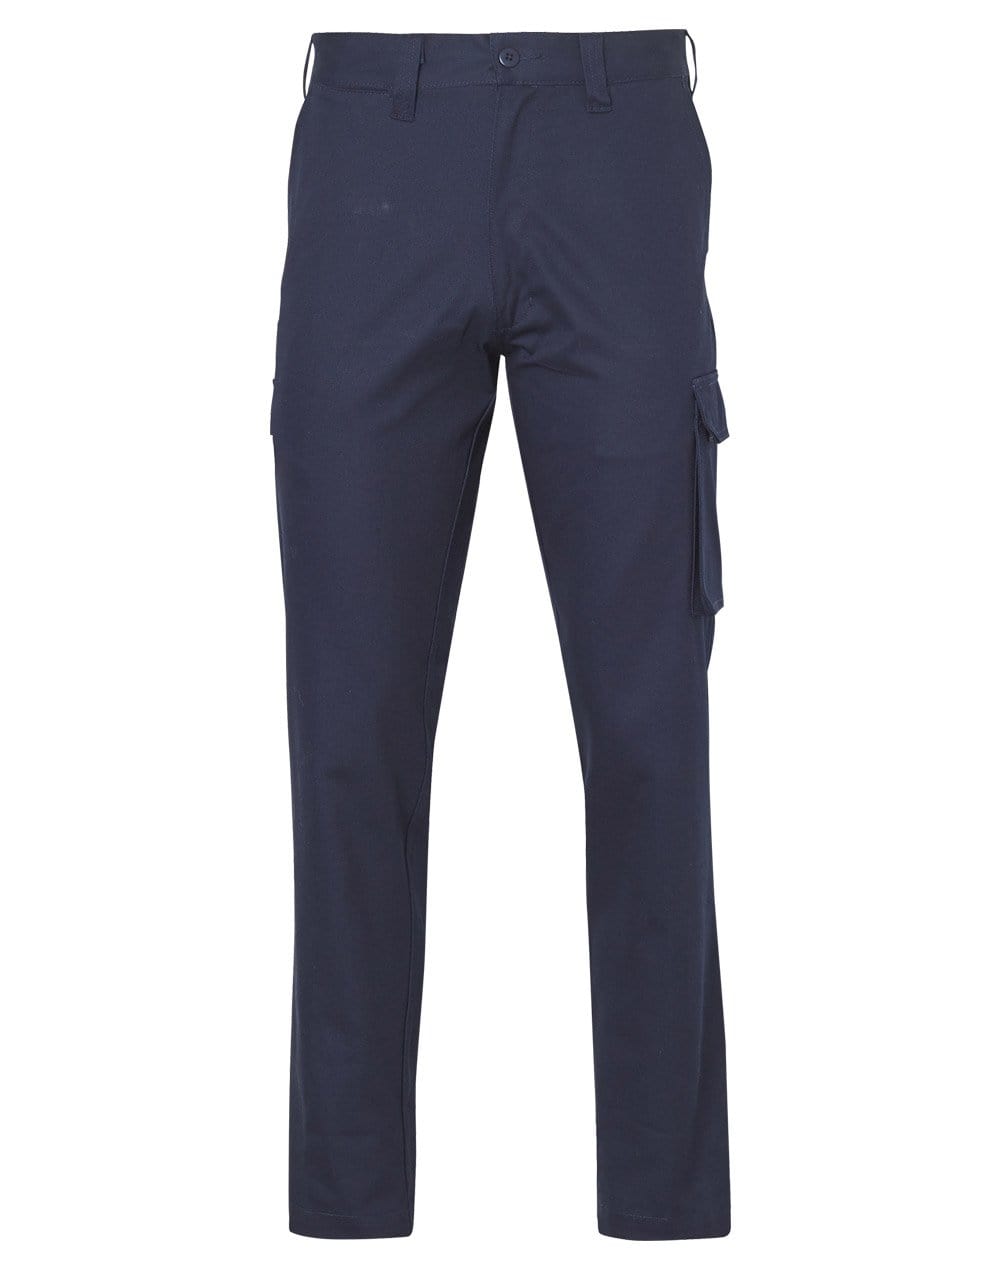 MEN'S HEAVY COTTON PRE-SHRUNK DRILL PANTS Stout Size WP08 Work Wear Benchmark Navy 87S 